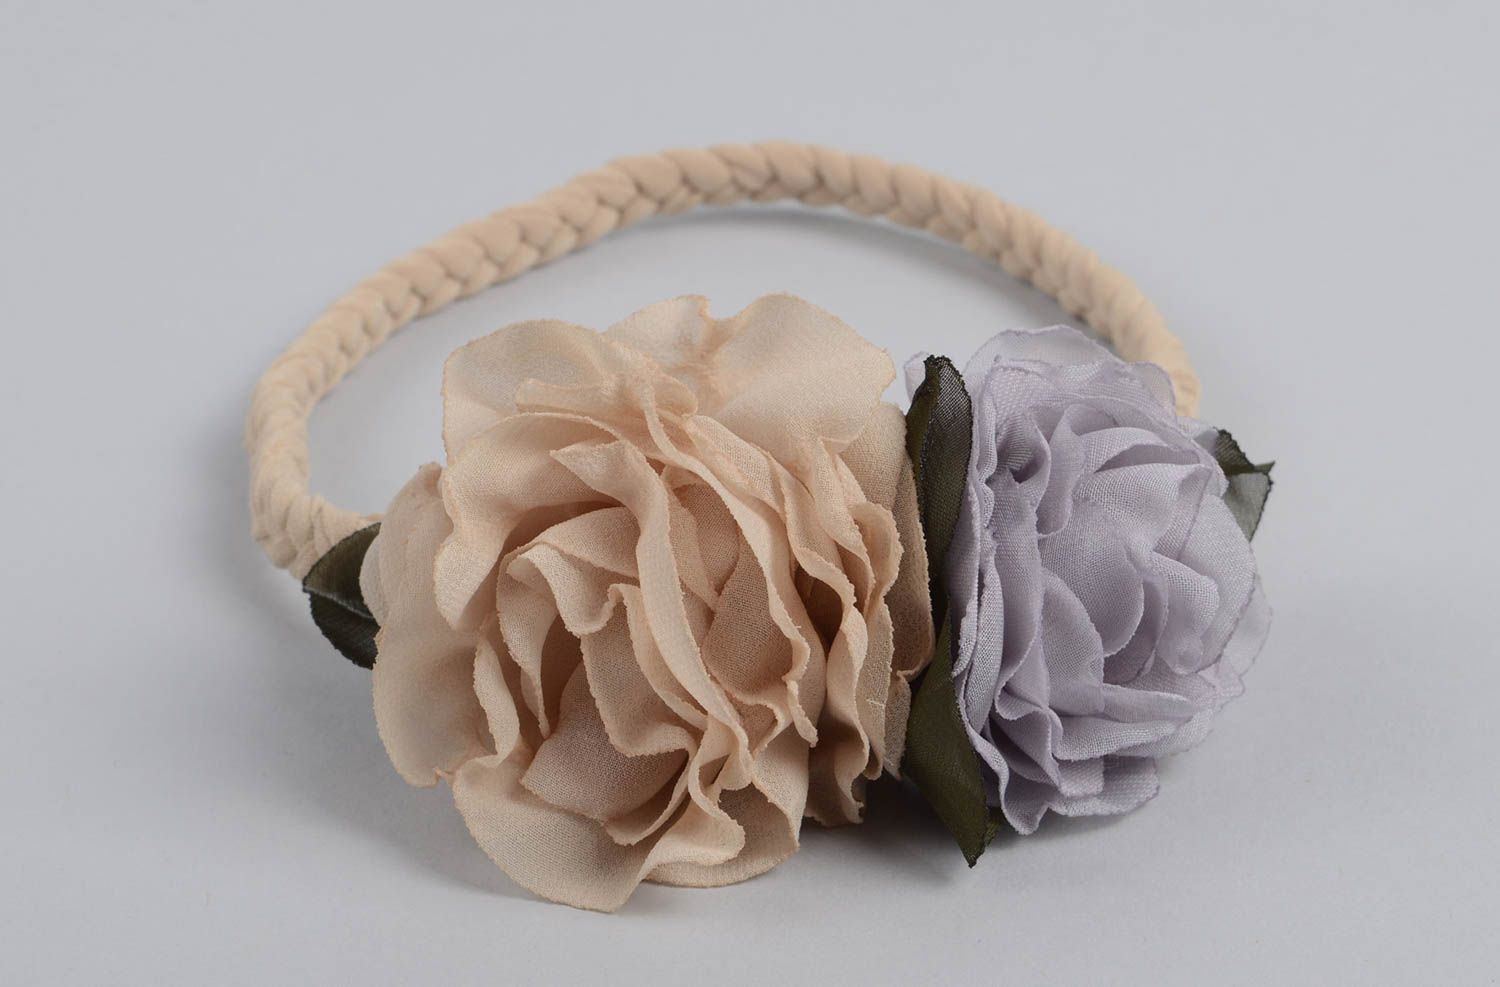 Unusual handmade flower headband stylish headband flowers in hair small gifts photo 1